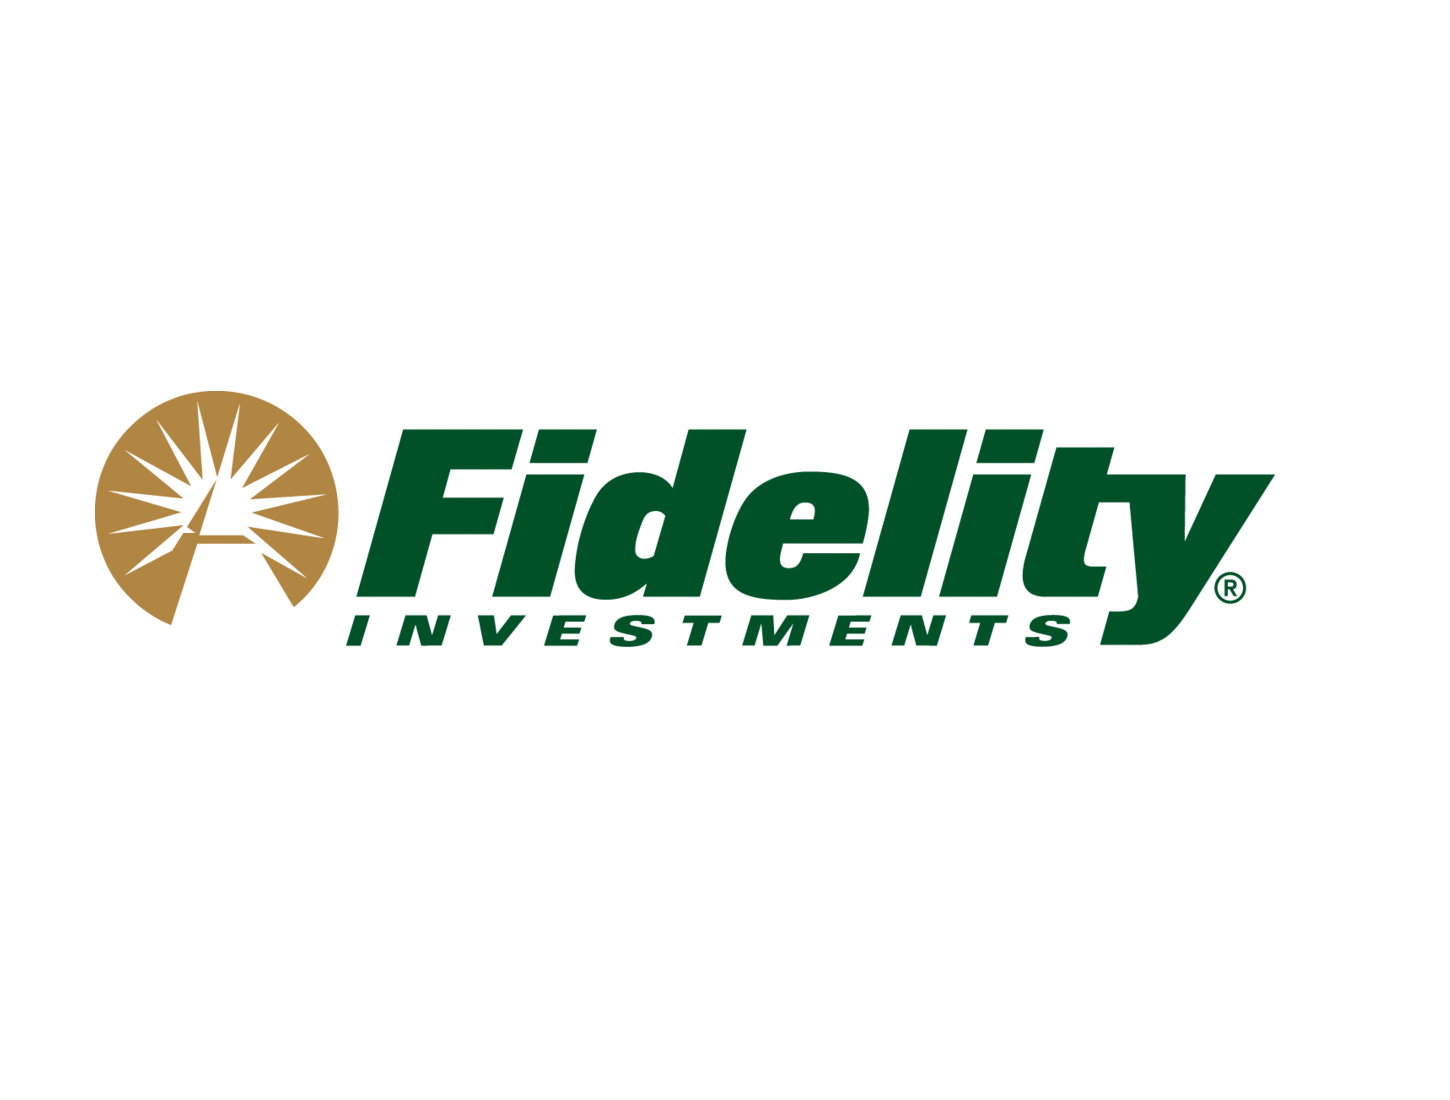 fidelity-investments-logo